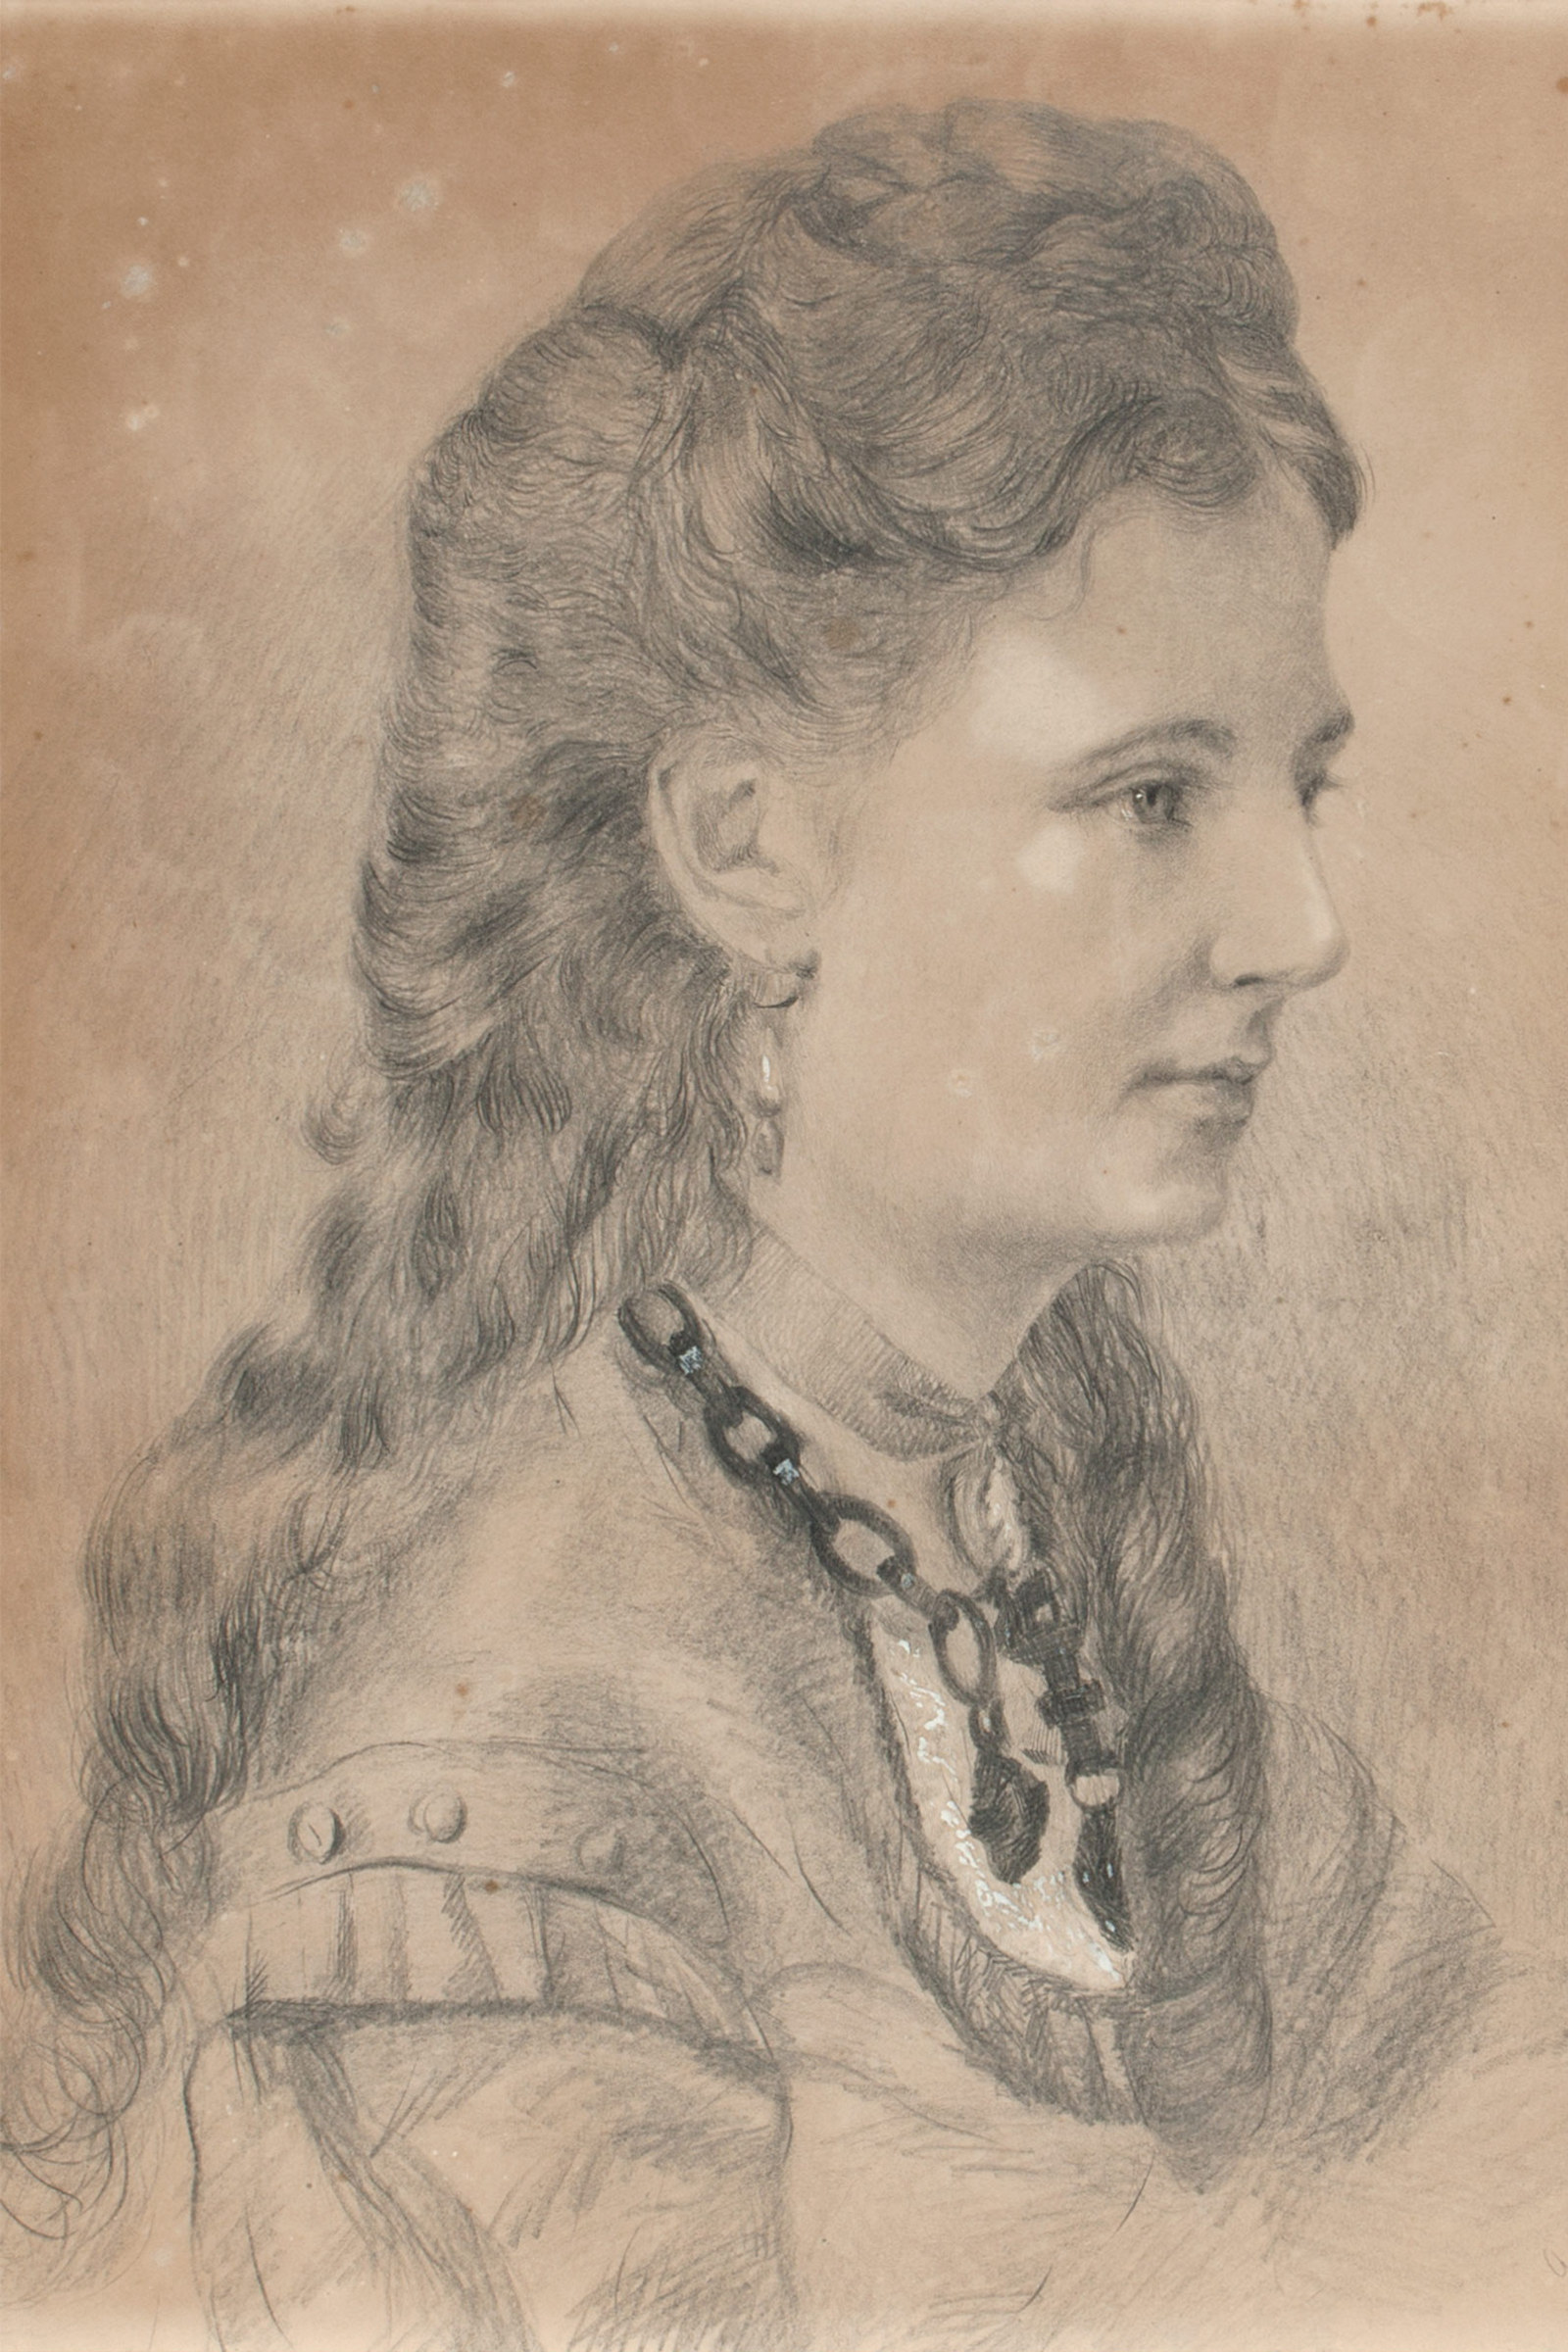 HR84/8-1:2. 1872. A large framed (-2) pencil portrait (-1) of Bessie Buchanan wearing a heavy ornate necklace (HR93/203).